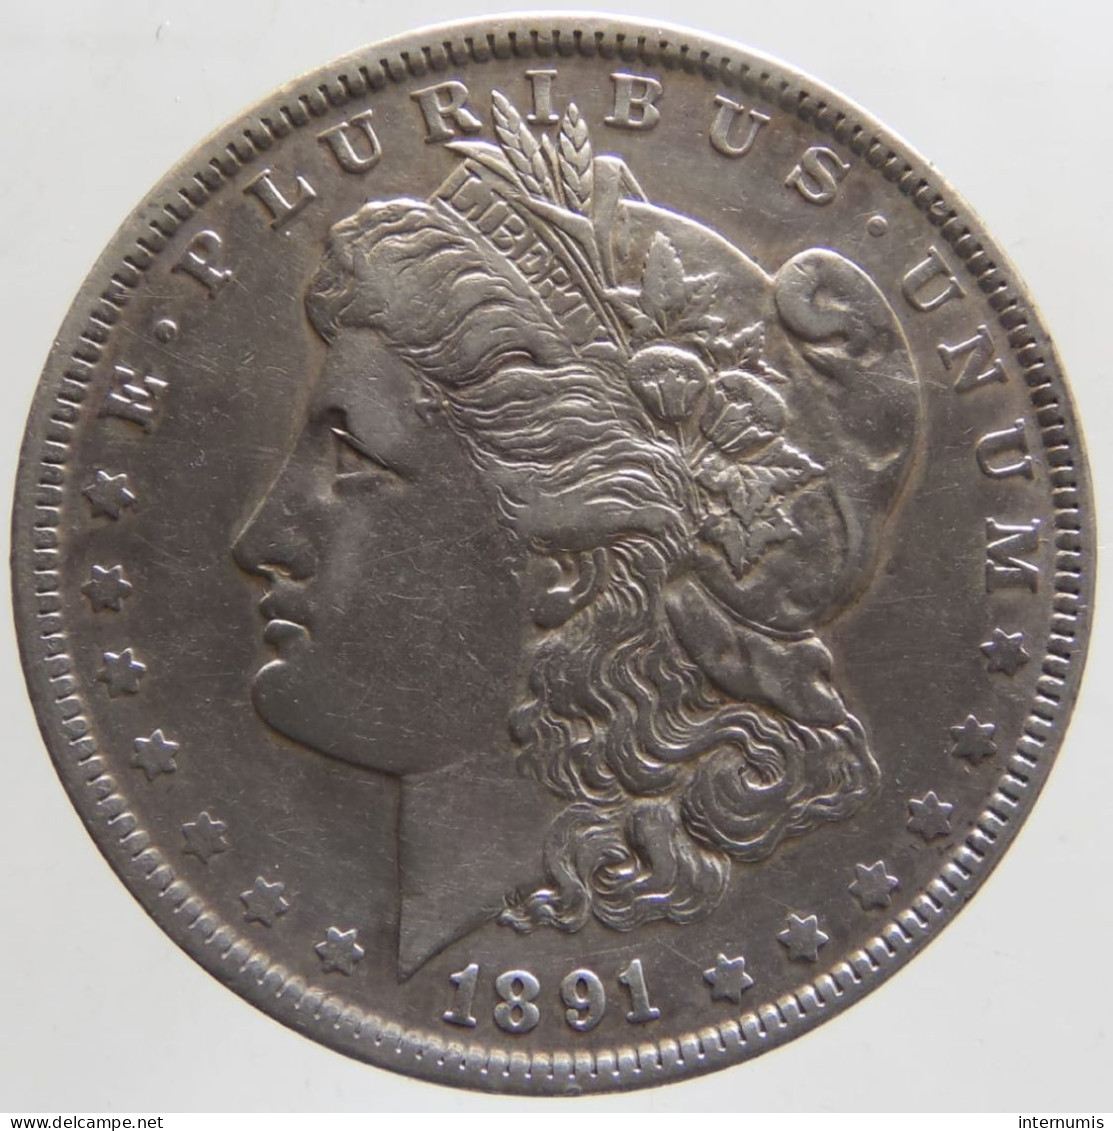 Etats-Unis / USA, Morgan, 1 Dollar, 1891, Argent (Silver), TTB (EF), KM#110 - 1878-1921: Morgan